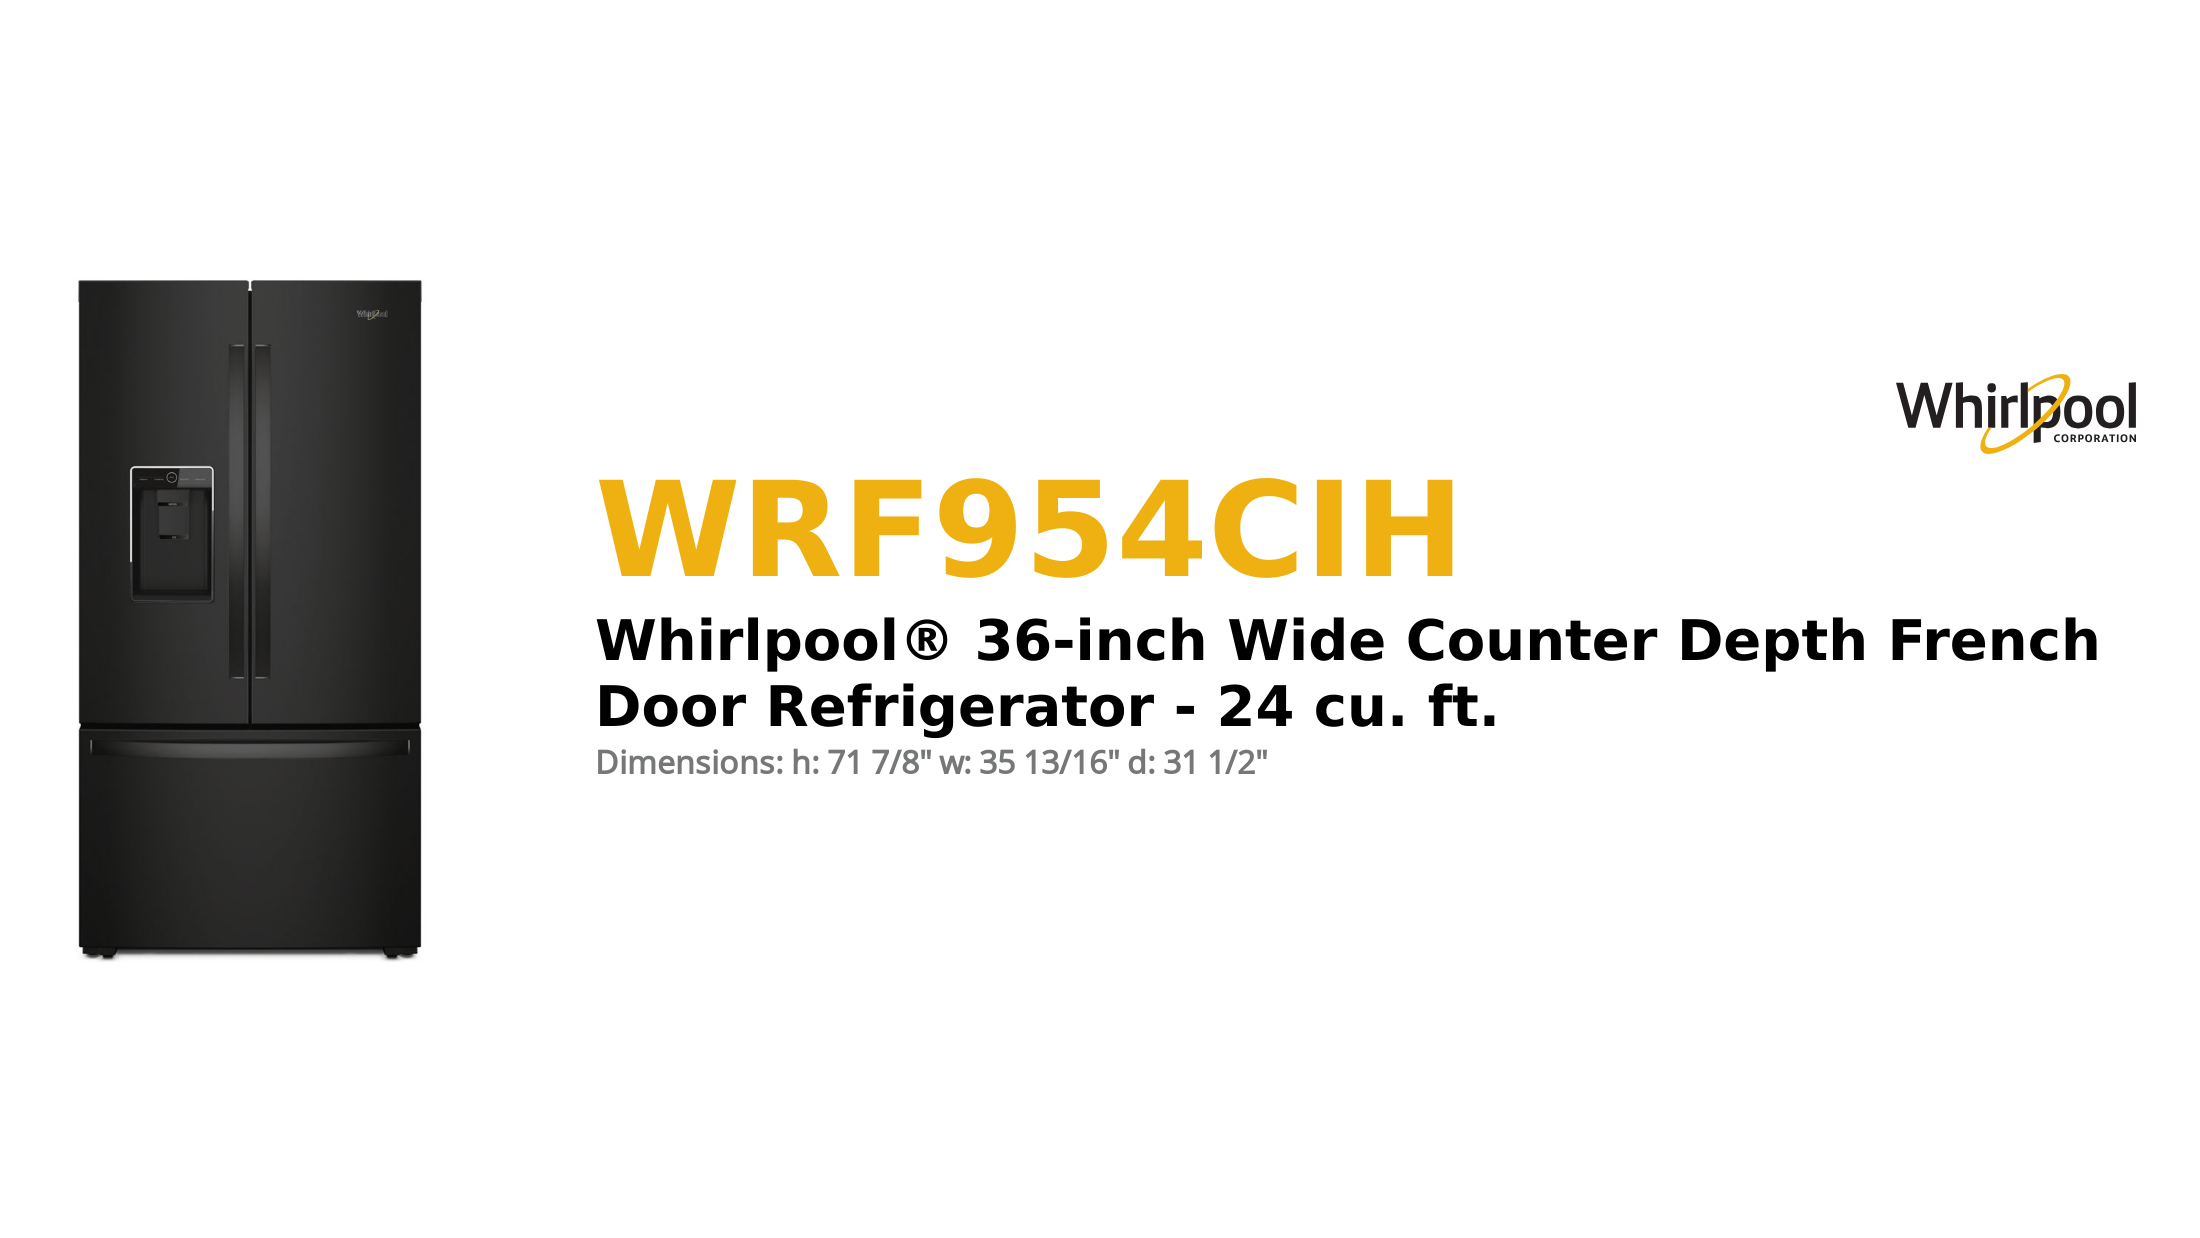 Whirlpool French Door Refrigeration WRF954CIH Product Brief